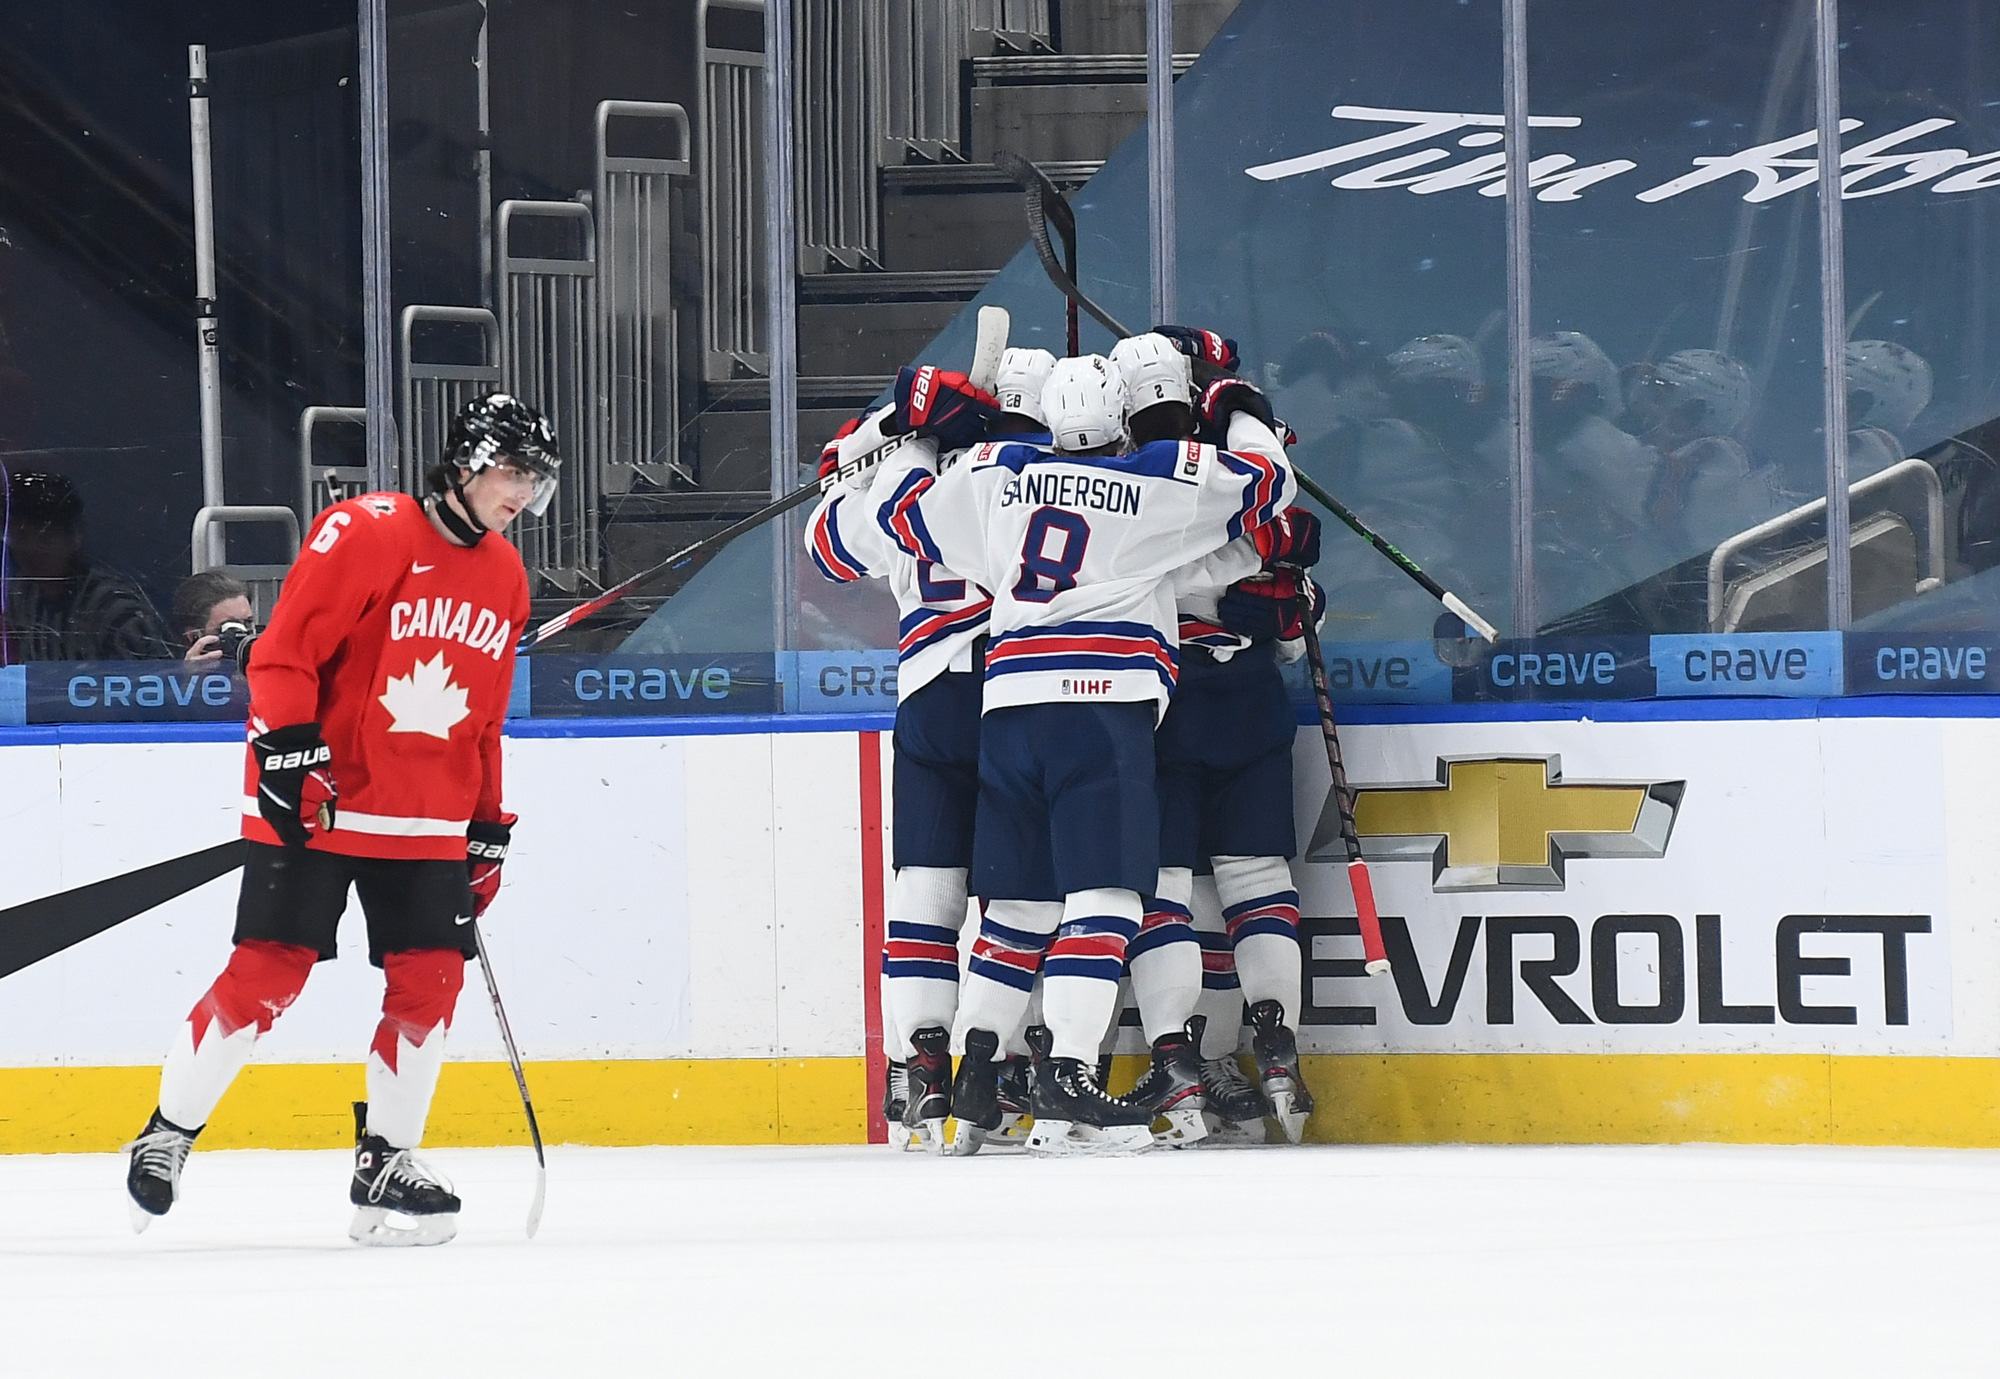 IIHF - Gallery Canada vs United States (Final)